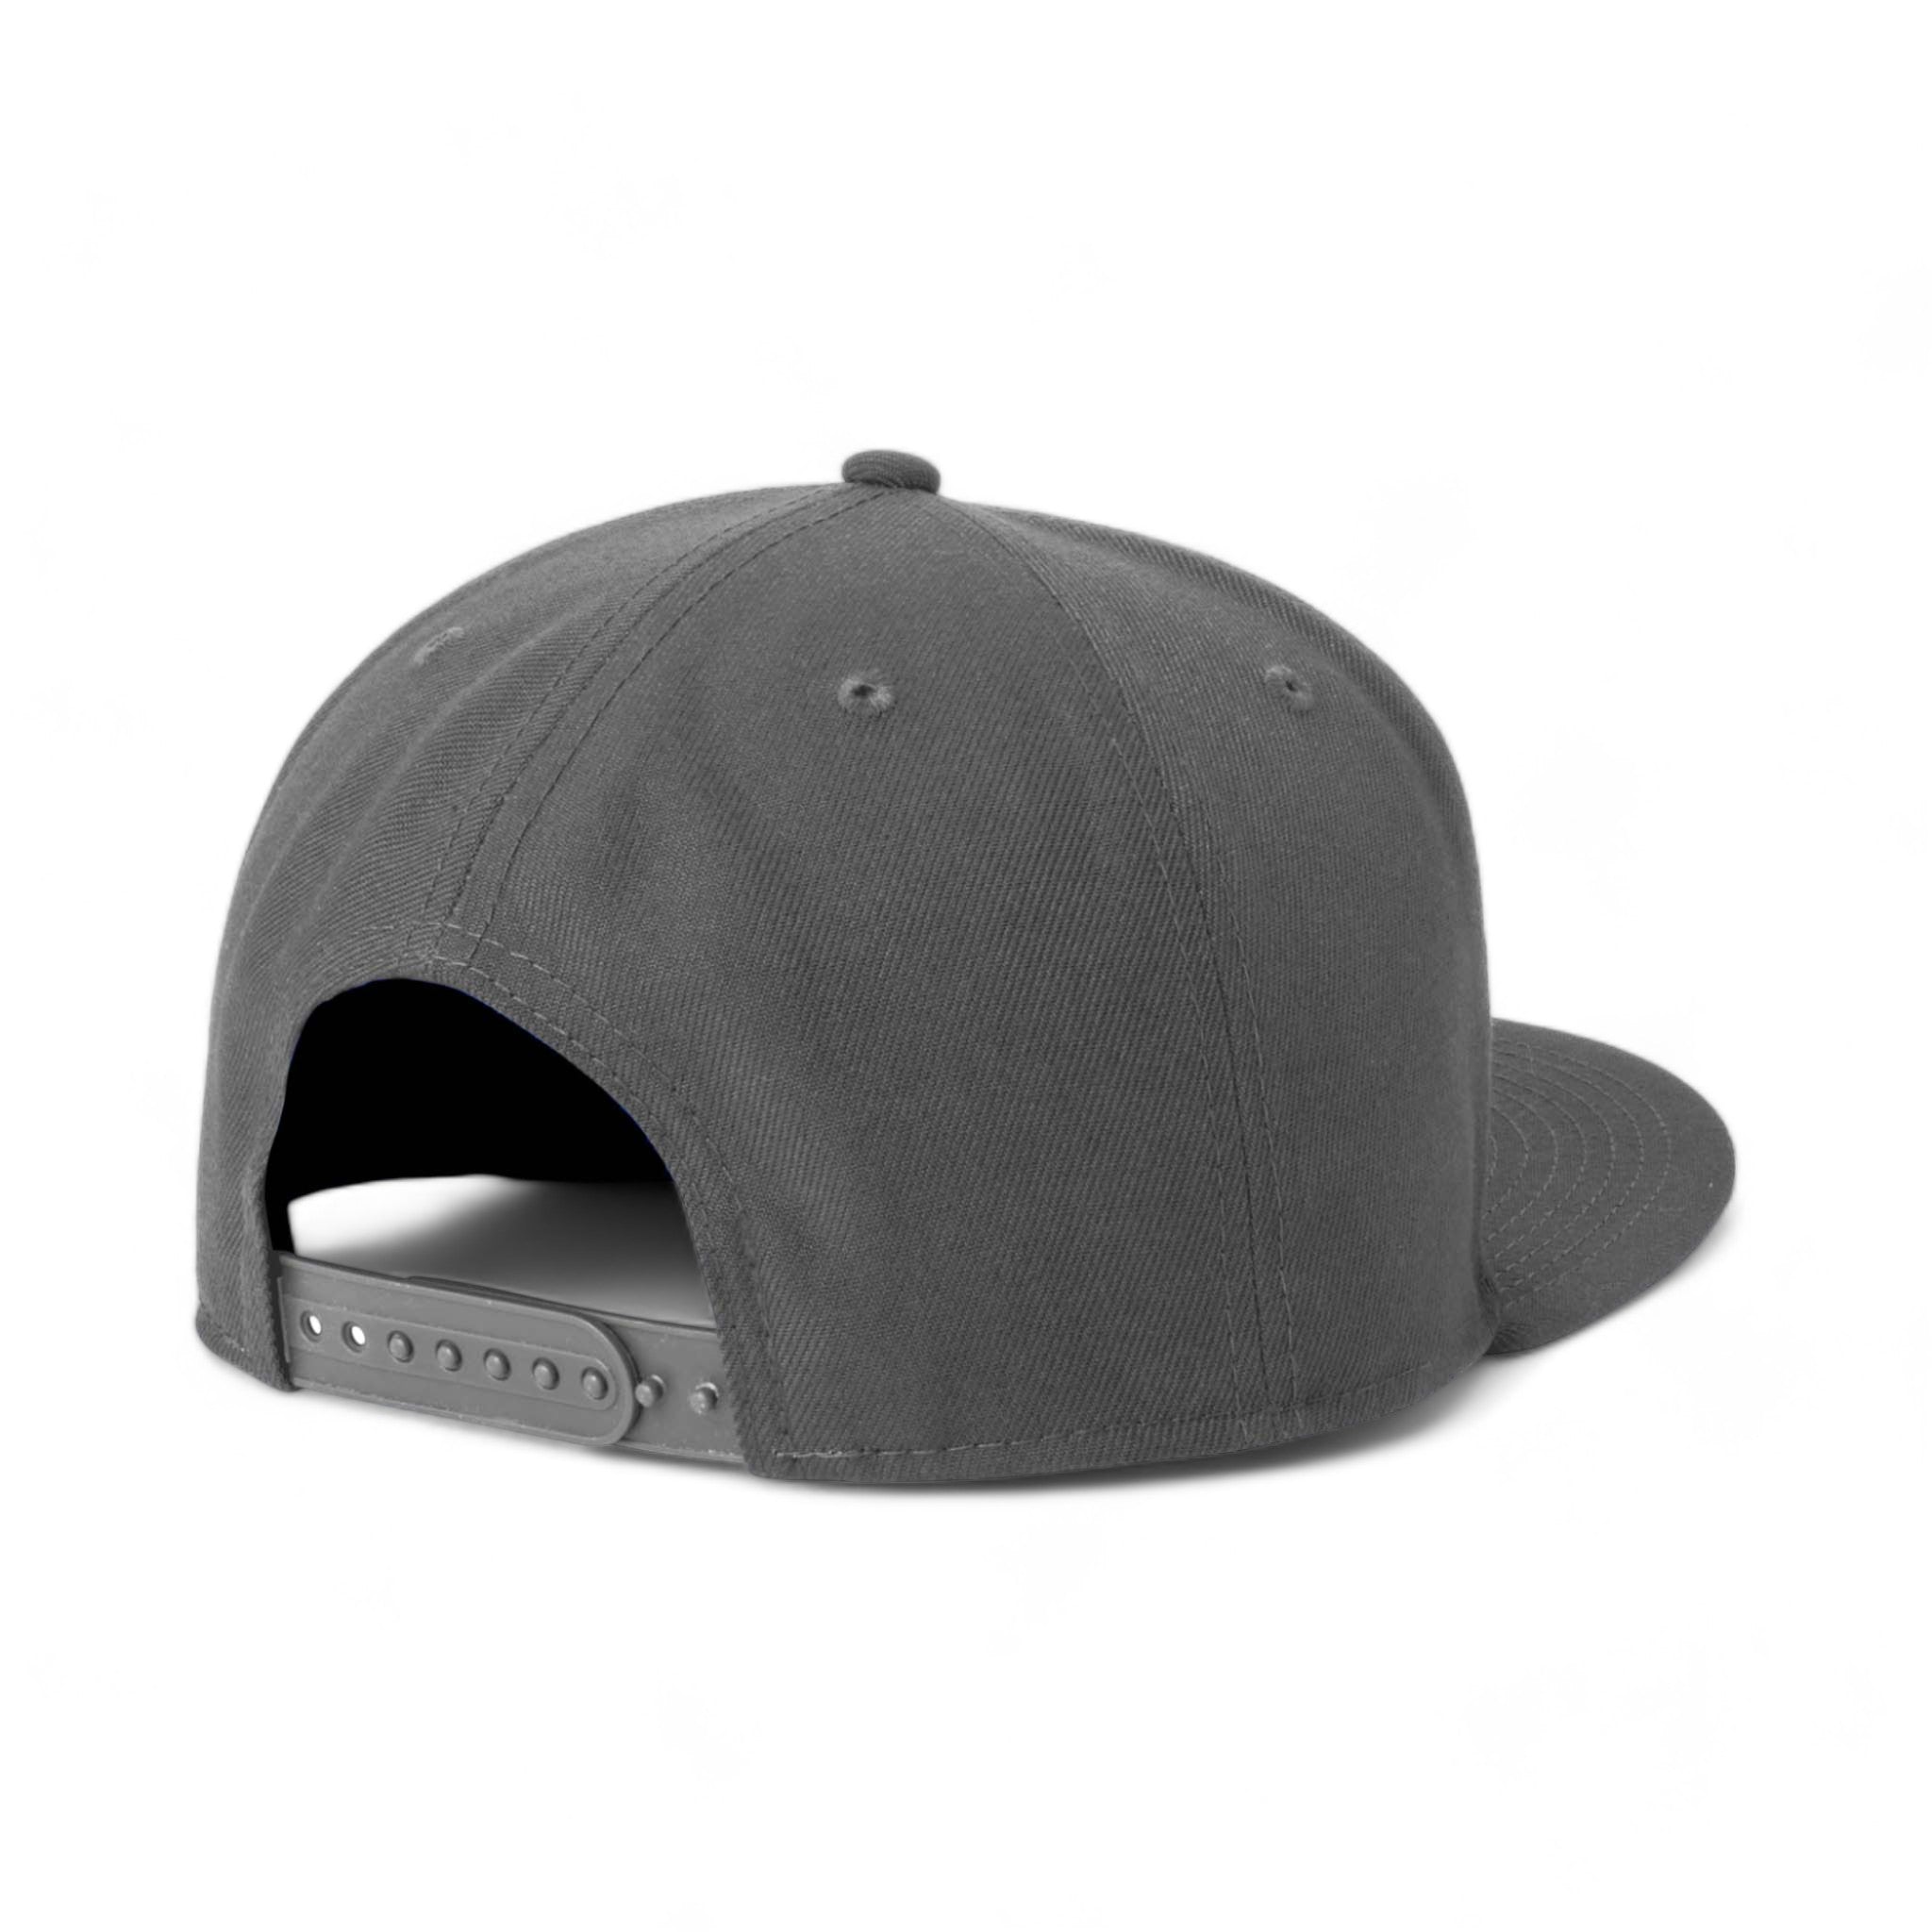 Back view of New Era NE4020 custom hat in graphite